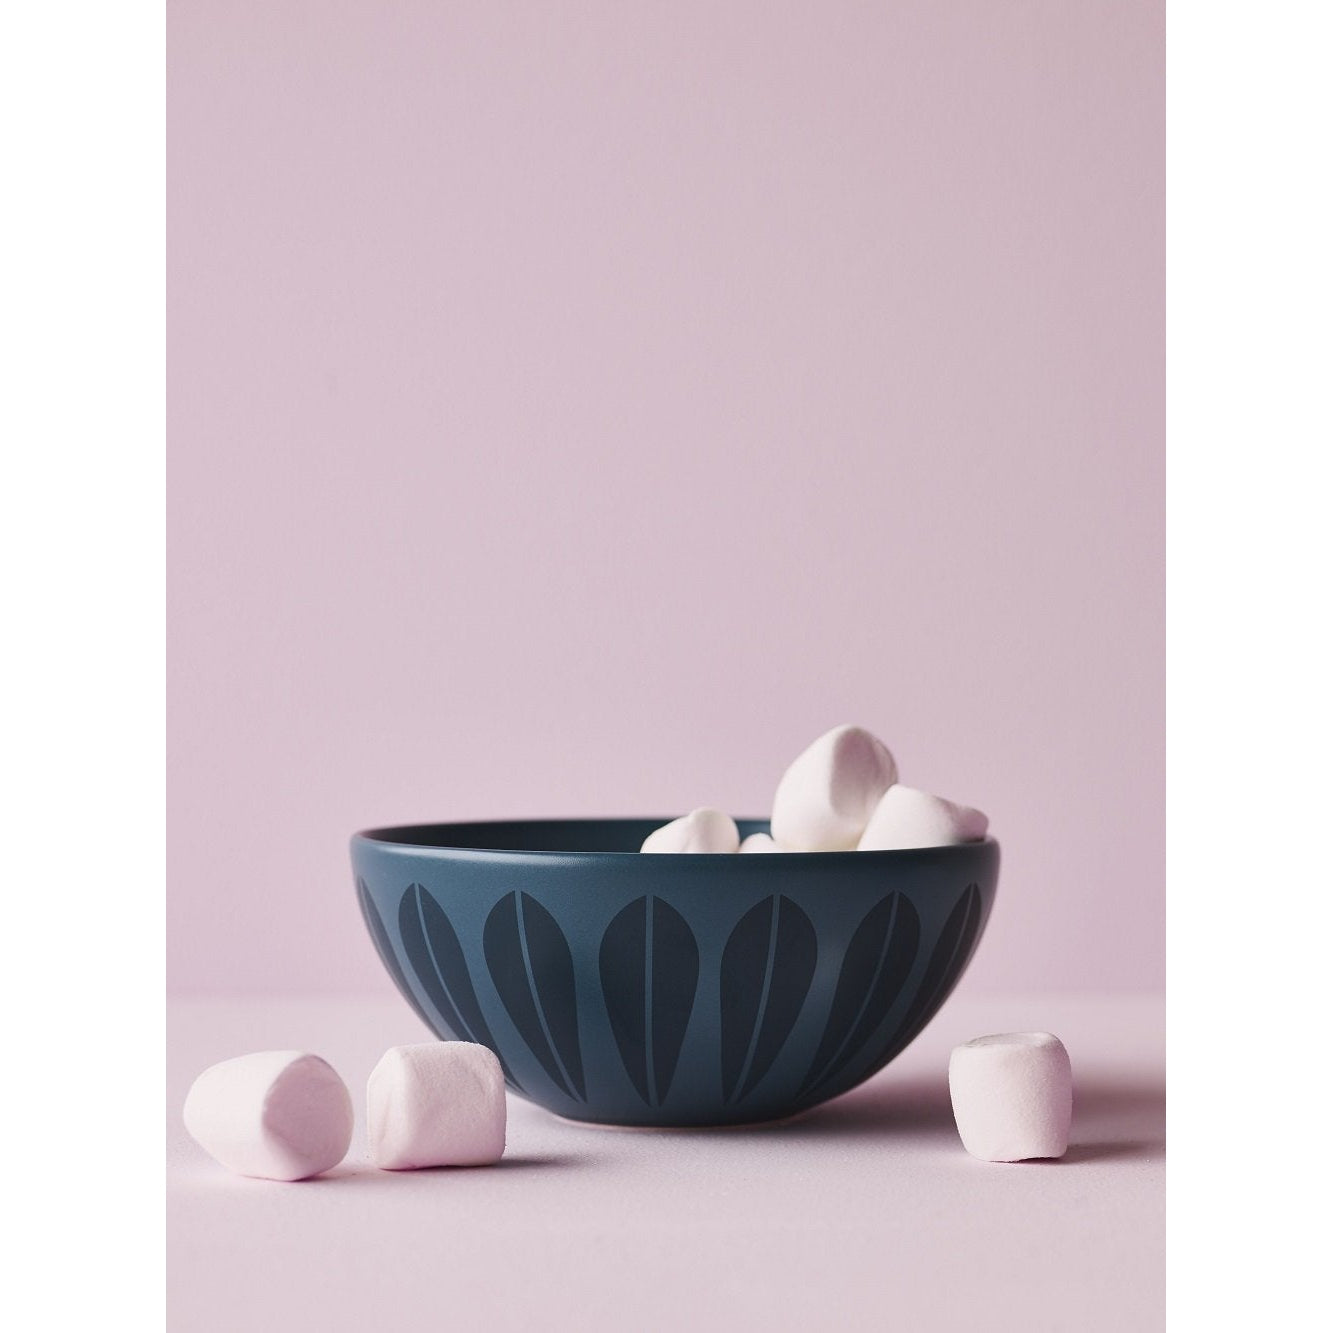 Lucie Kaas Arne Clausen Collection Sugar Bowl, grigio